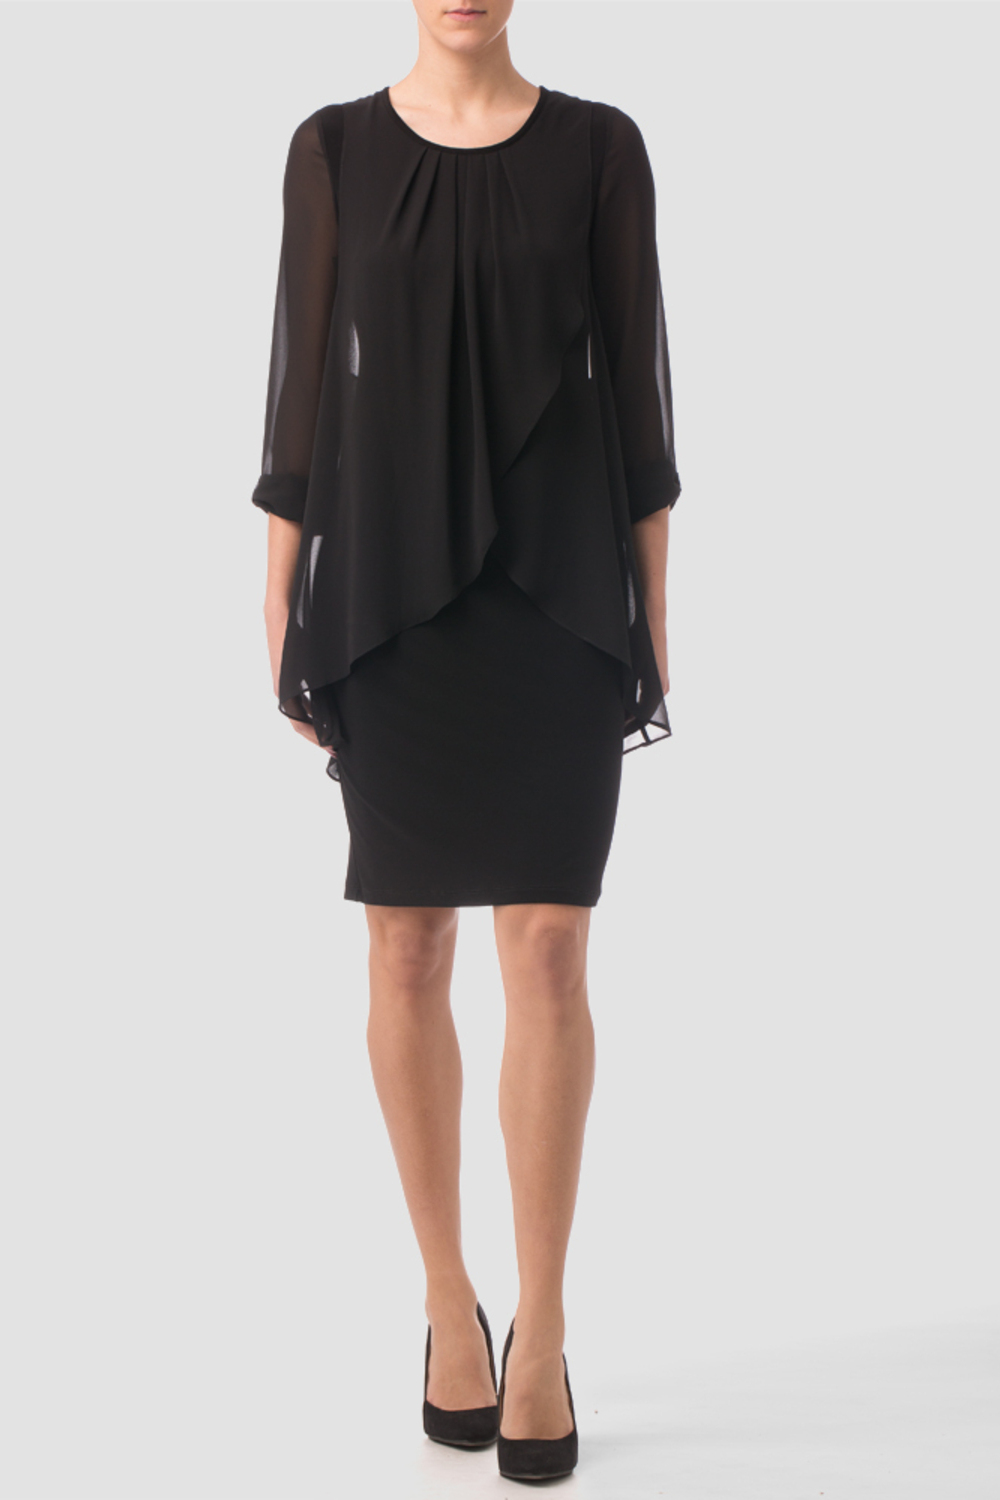 Joseph Ribkoff dress style 163262. Black/black